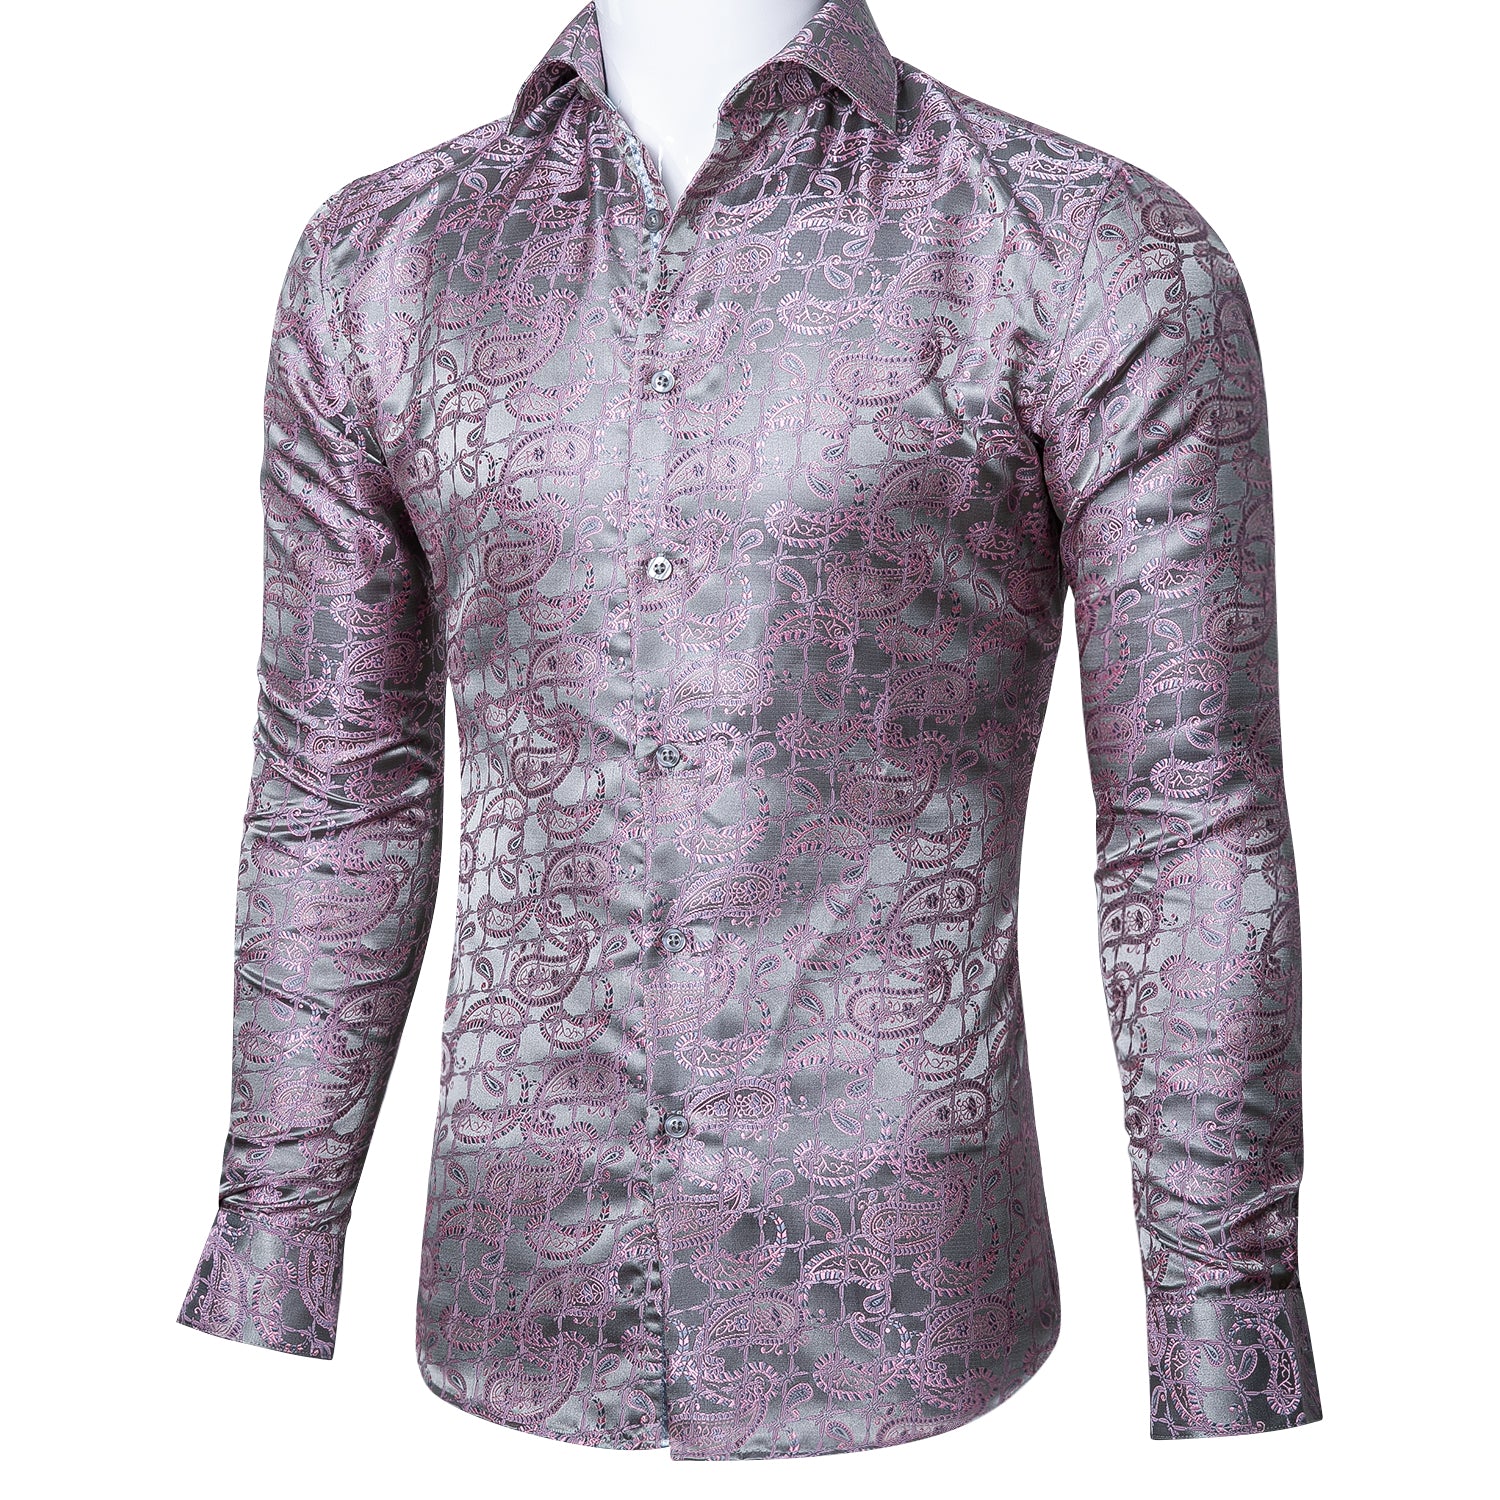 Barry.wang Novelty Grey Purple Paisley Shirt